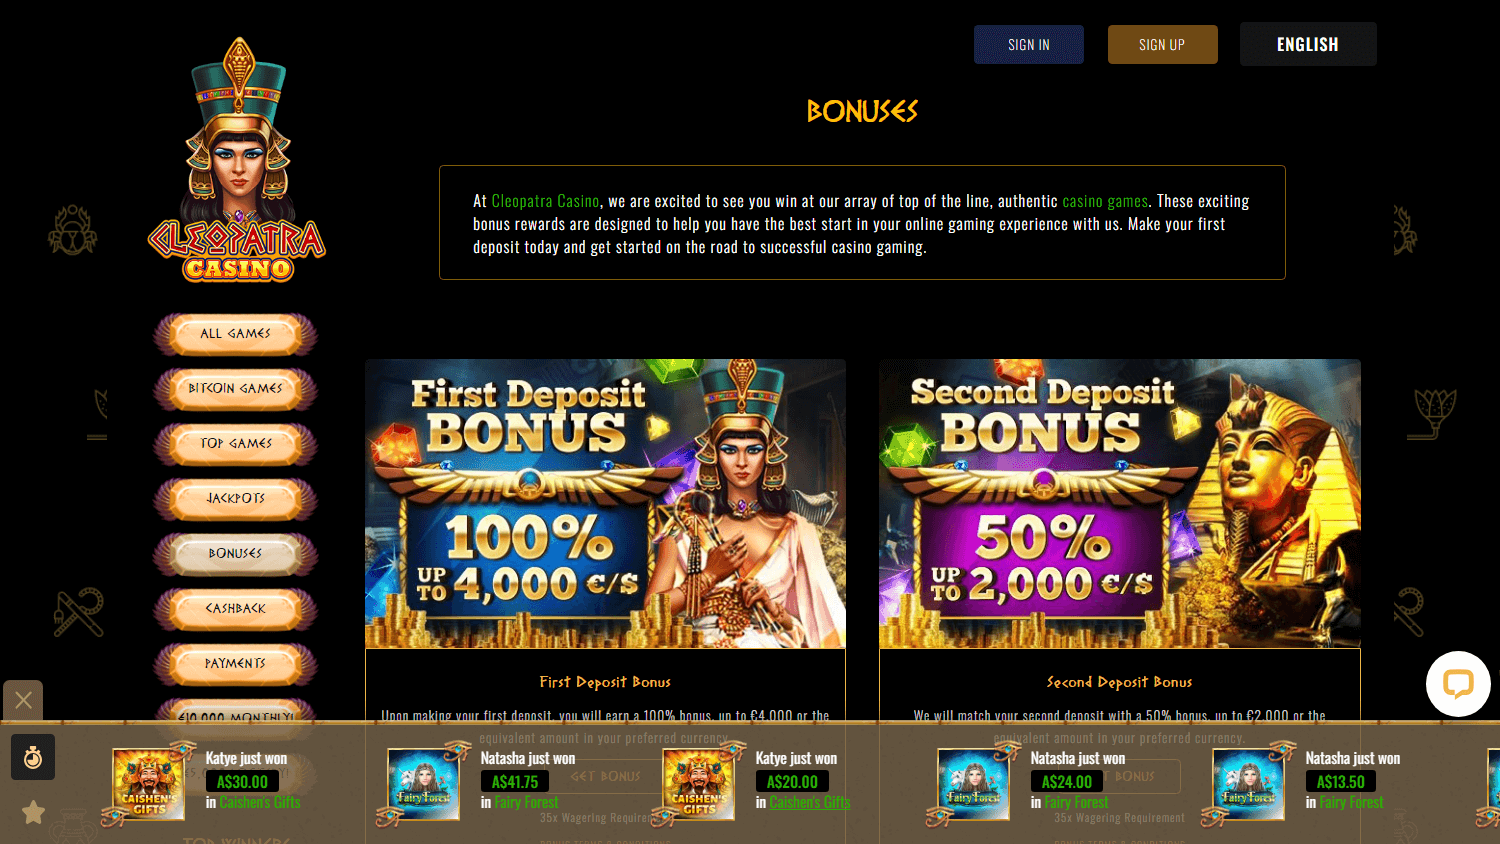 cleopatra_casino_promotions_desktop